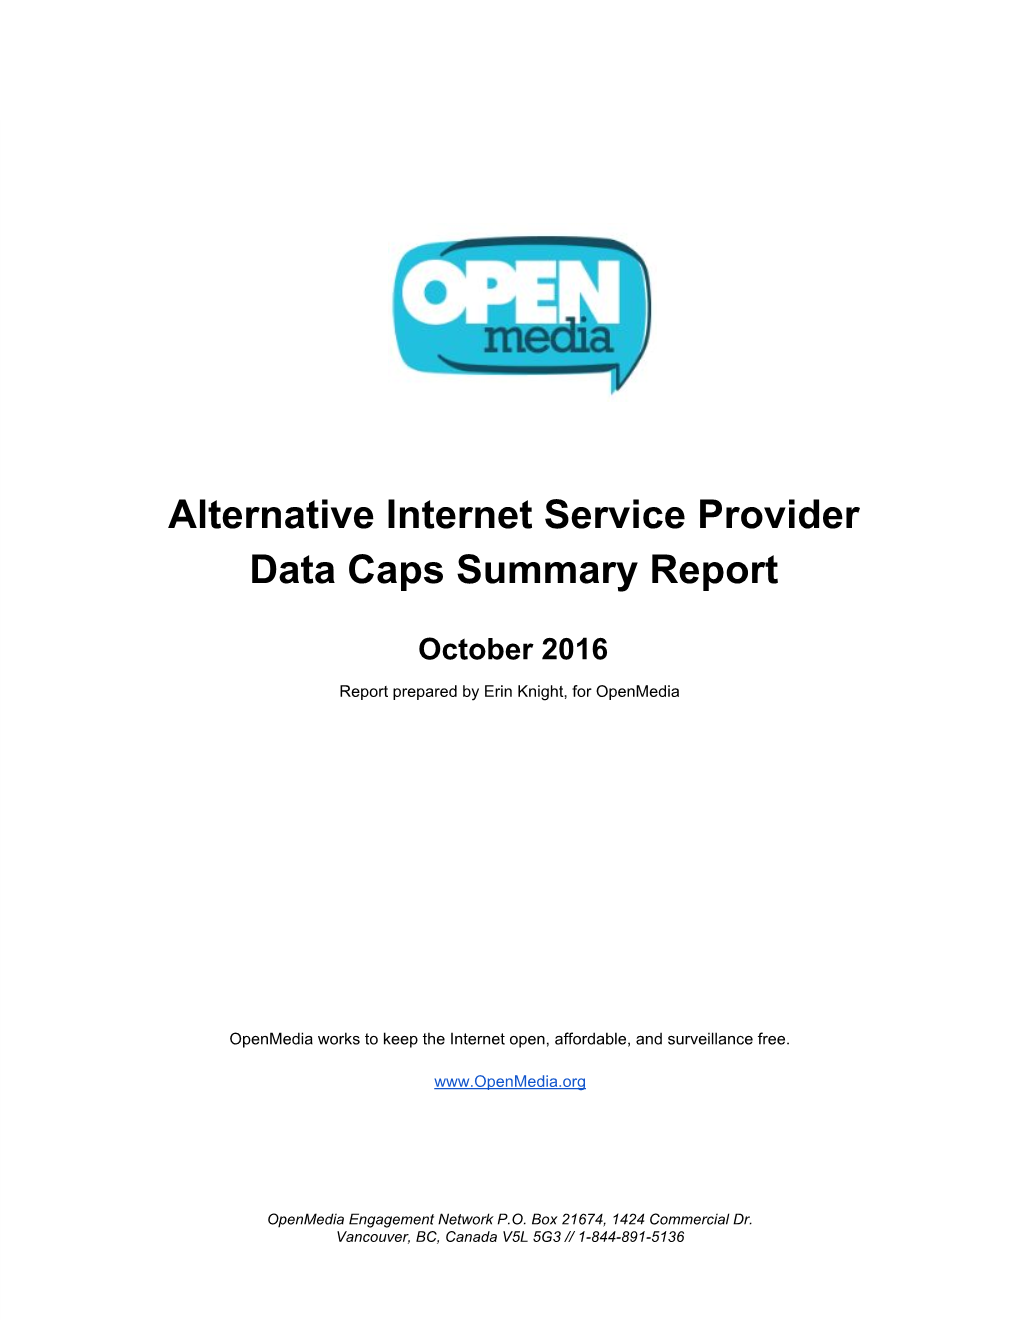 Alternative Internet Service Provider Data Caps Summary Report